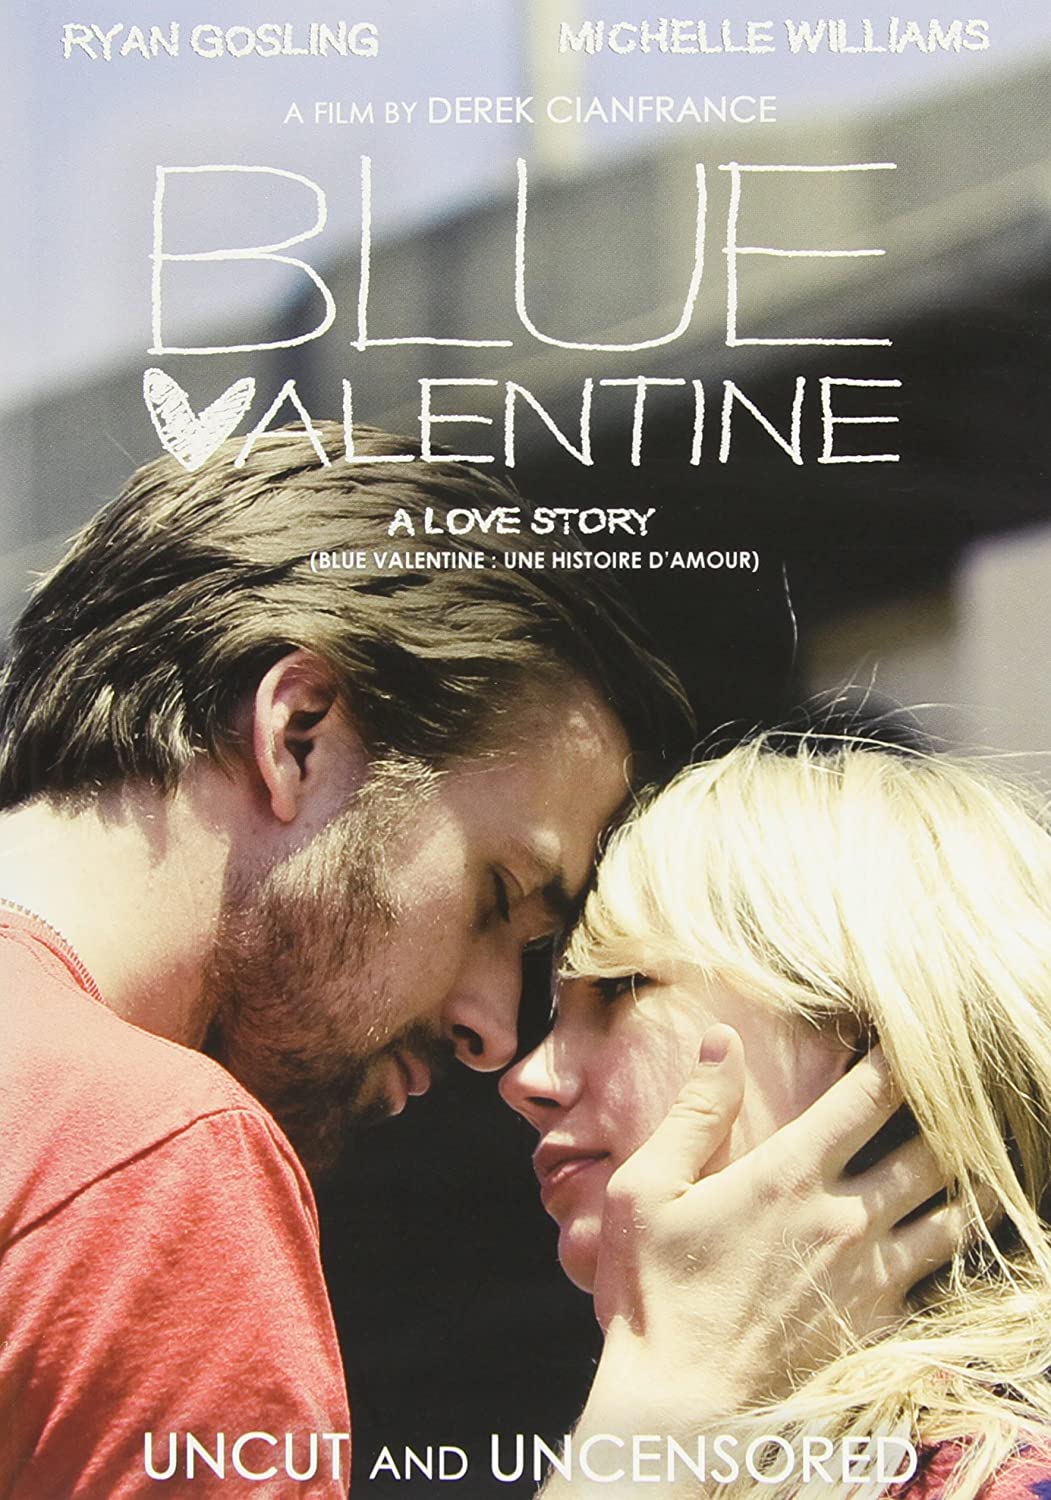 Amazon.com: Blue Valentine (Uncut and Uncensored): Ryan Gosling ...